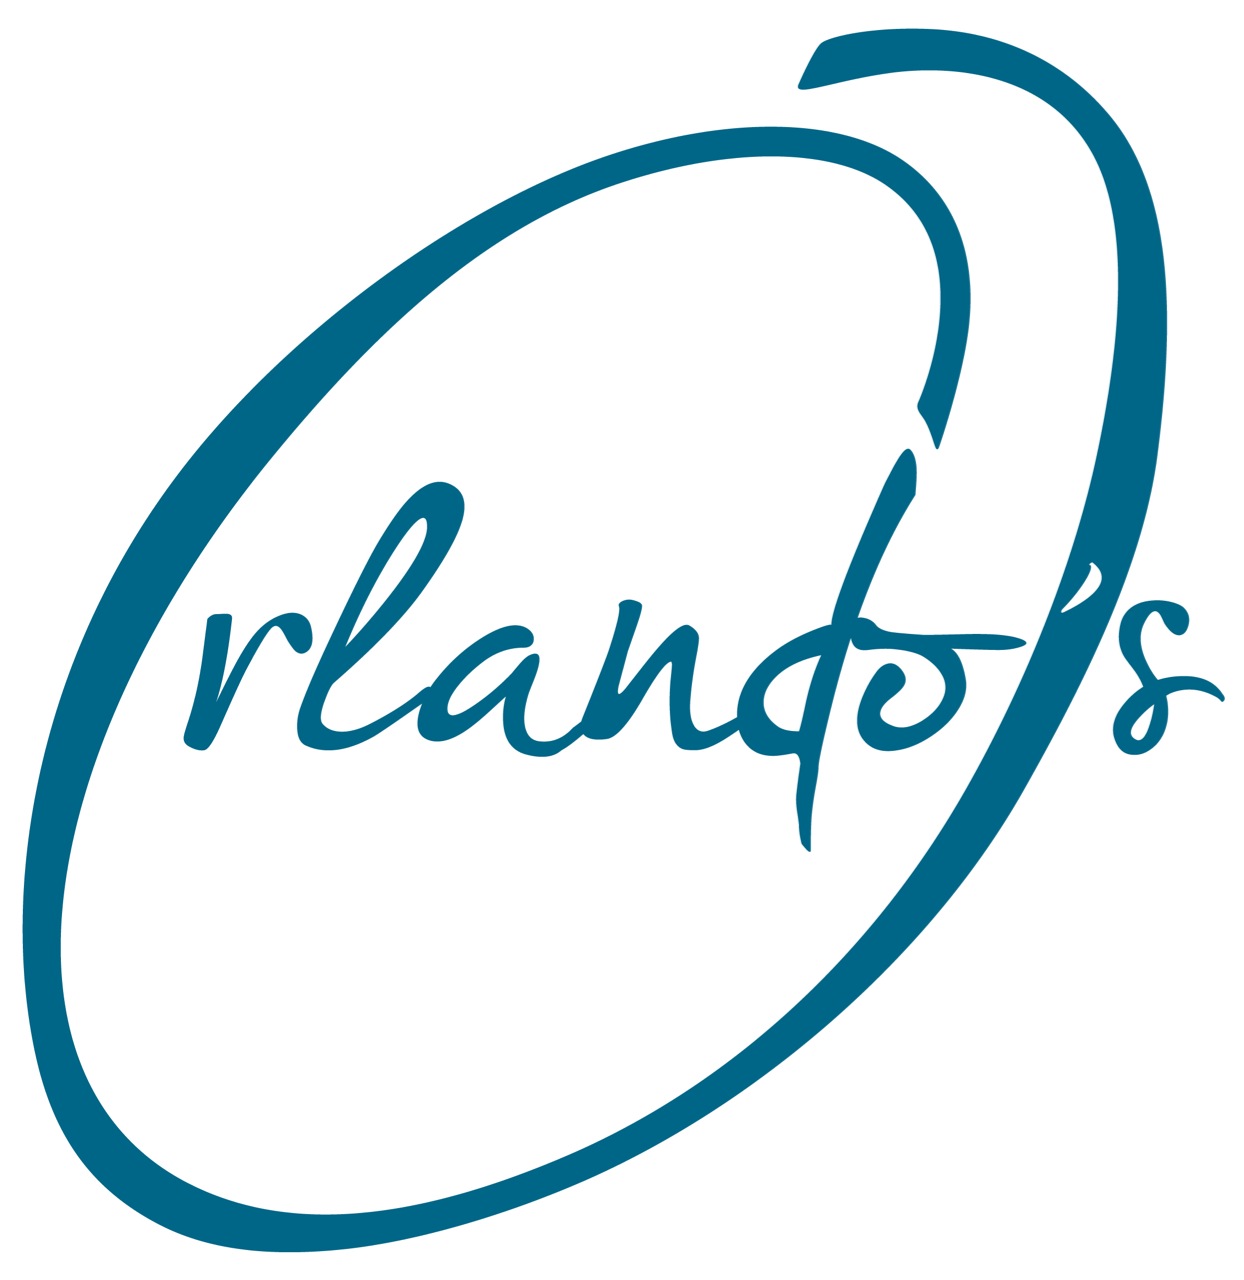 Orlando Logo for Restaurant - SLHTA